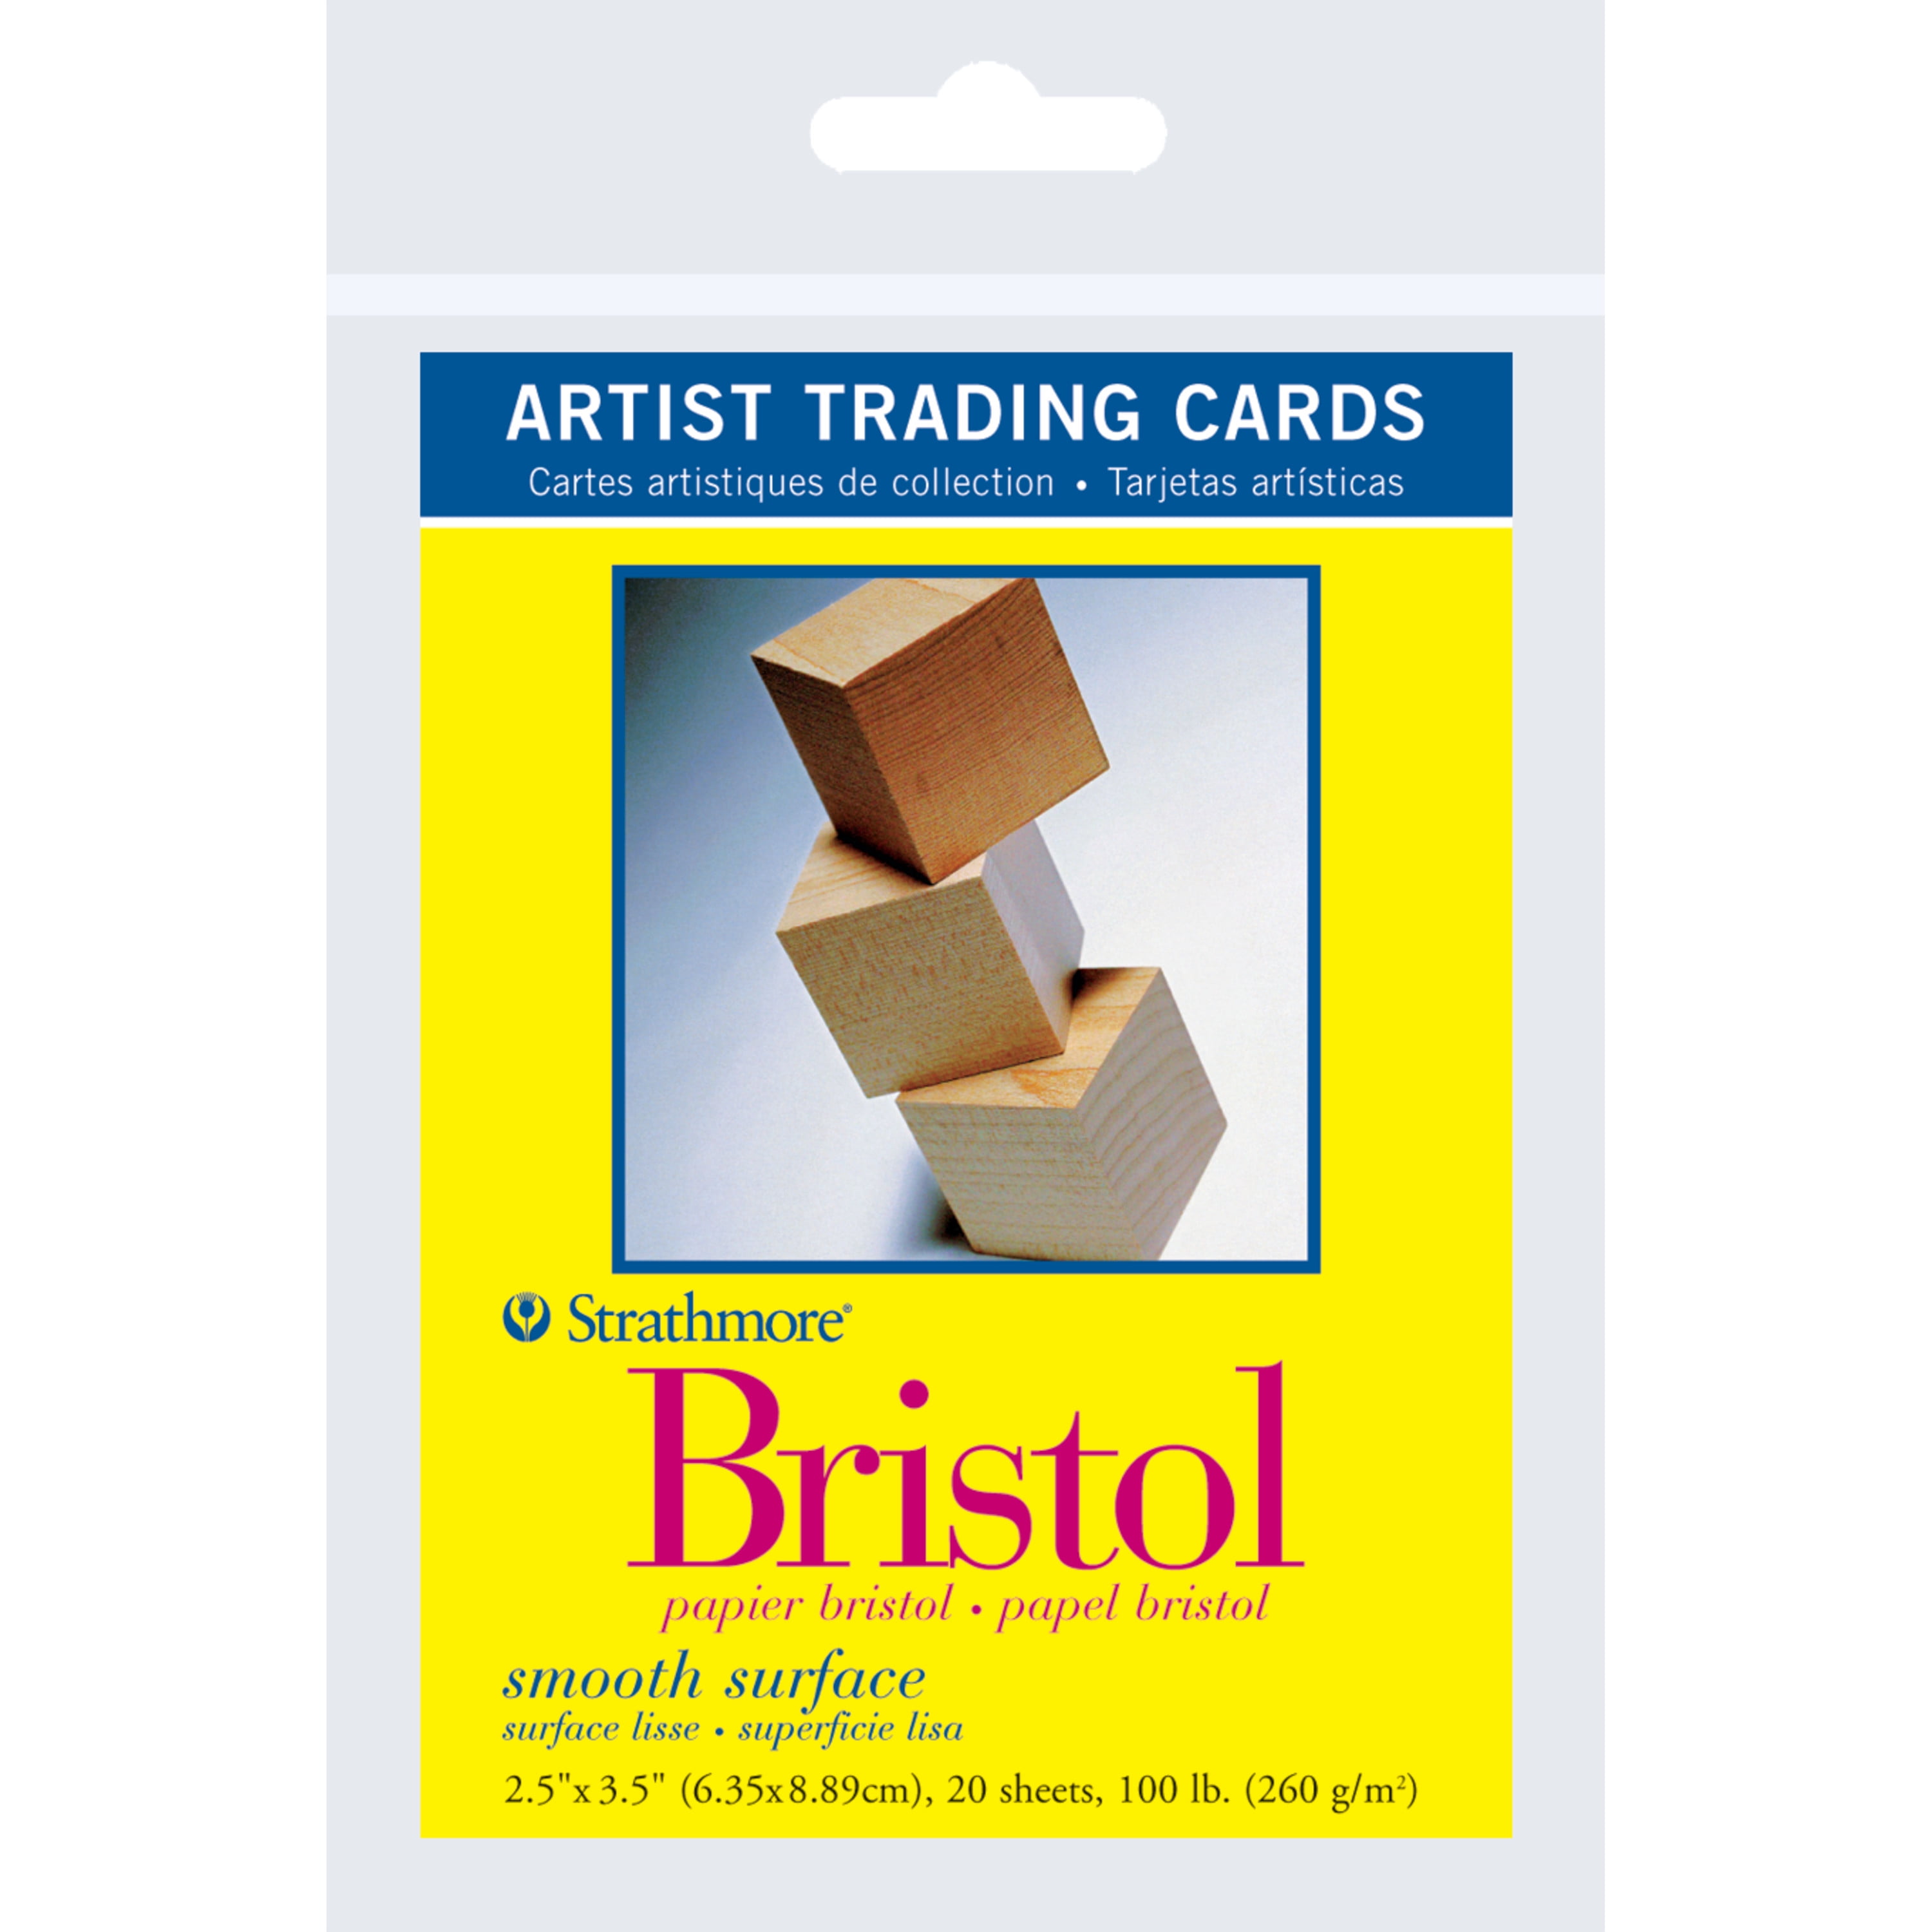 Strathmore 500 Series Bristol Board – Jerrys Artist Outlet